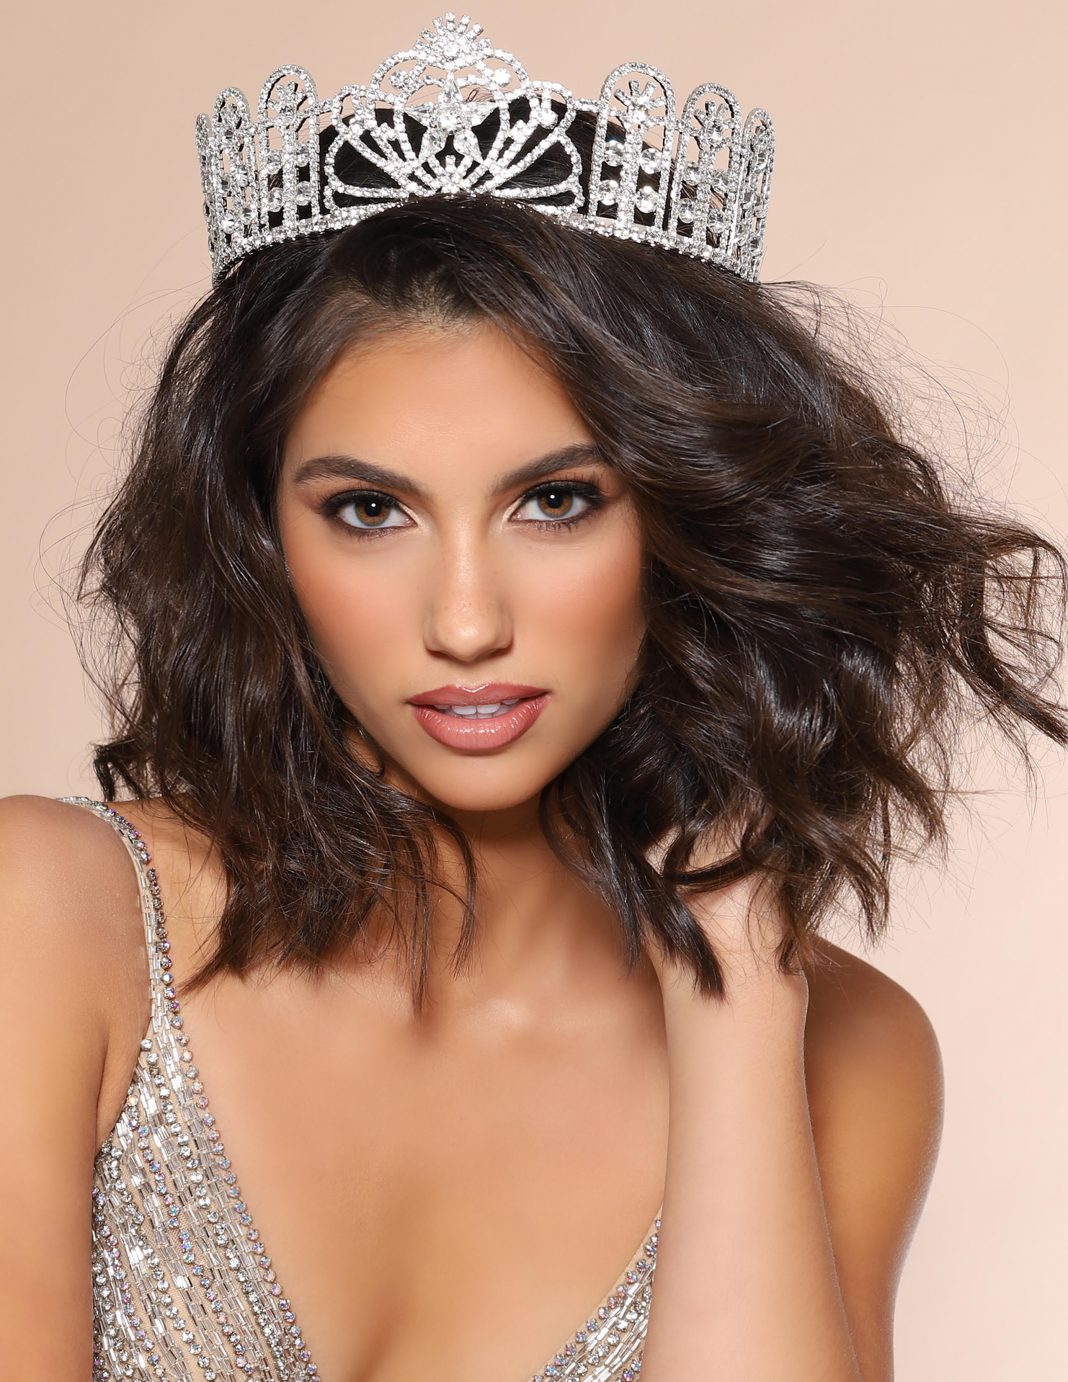 Coronado High Student Crowned Miss California Teen USA Coronado Times